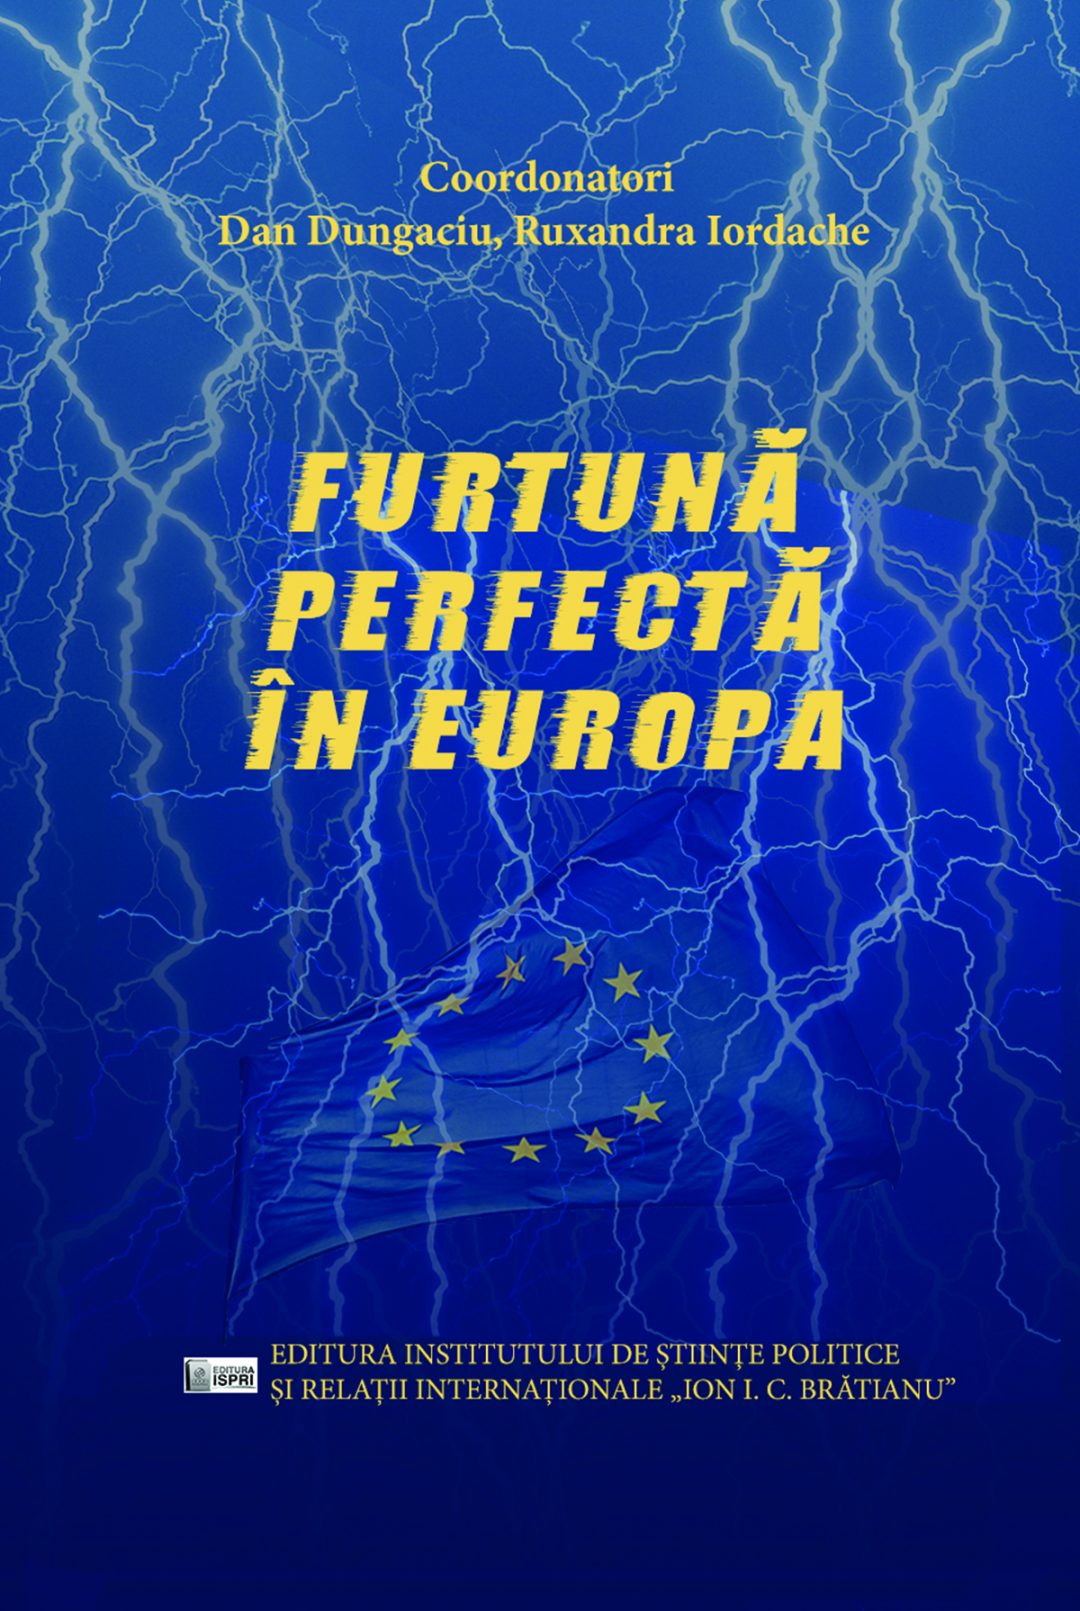 Dan Dungaciu, Ruxandra Iordache (coorod.) Furtuna  perfecta  în Europa